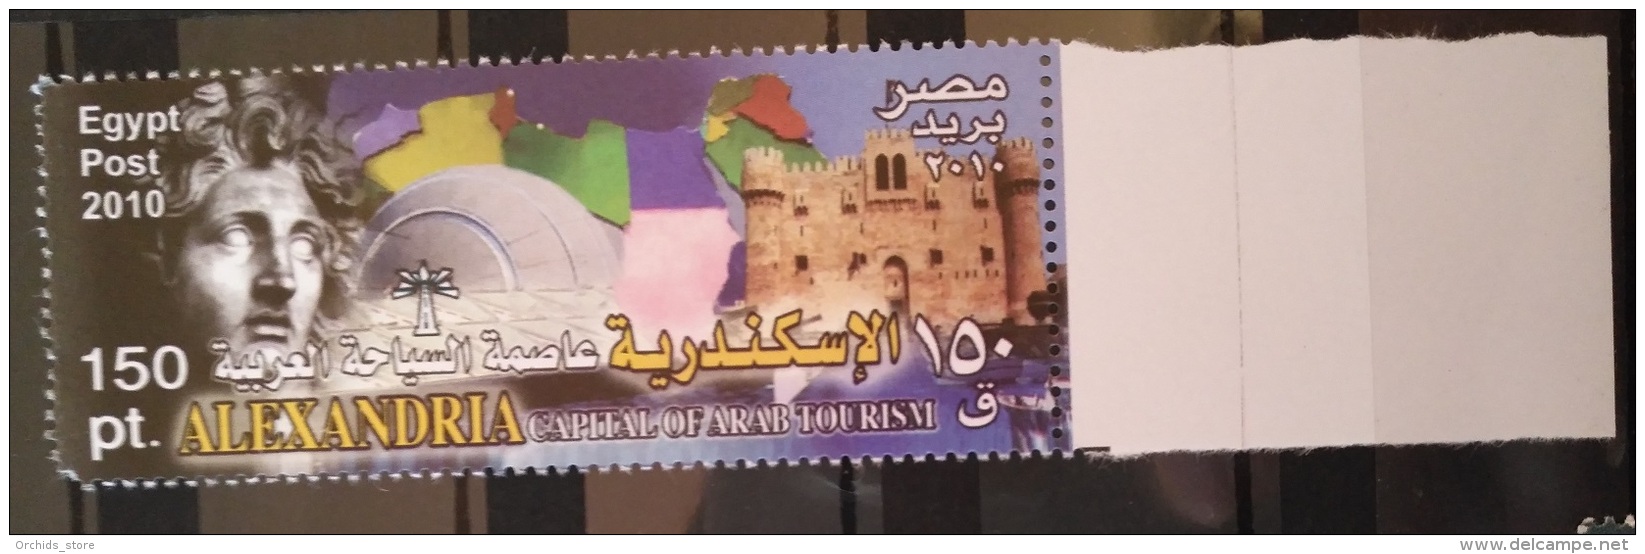 E24 - Egypt 2010 MNH Stamp - Alexandria Capital Of Arab Tourism - Unused Stamps